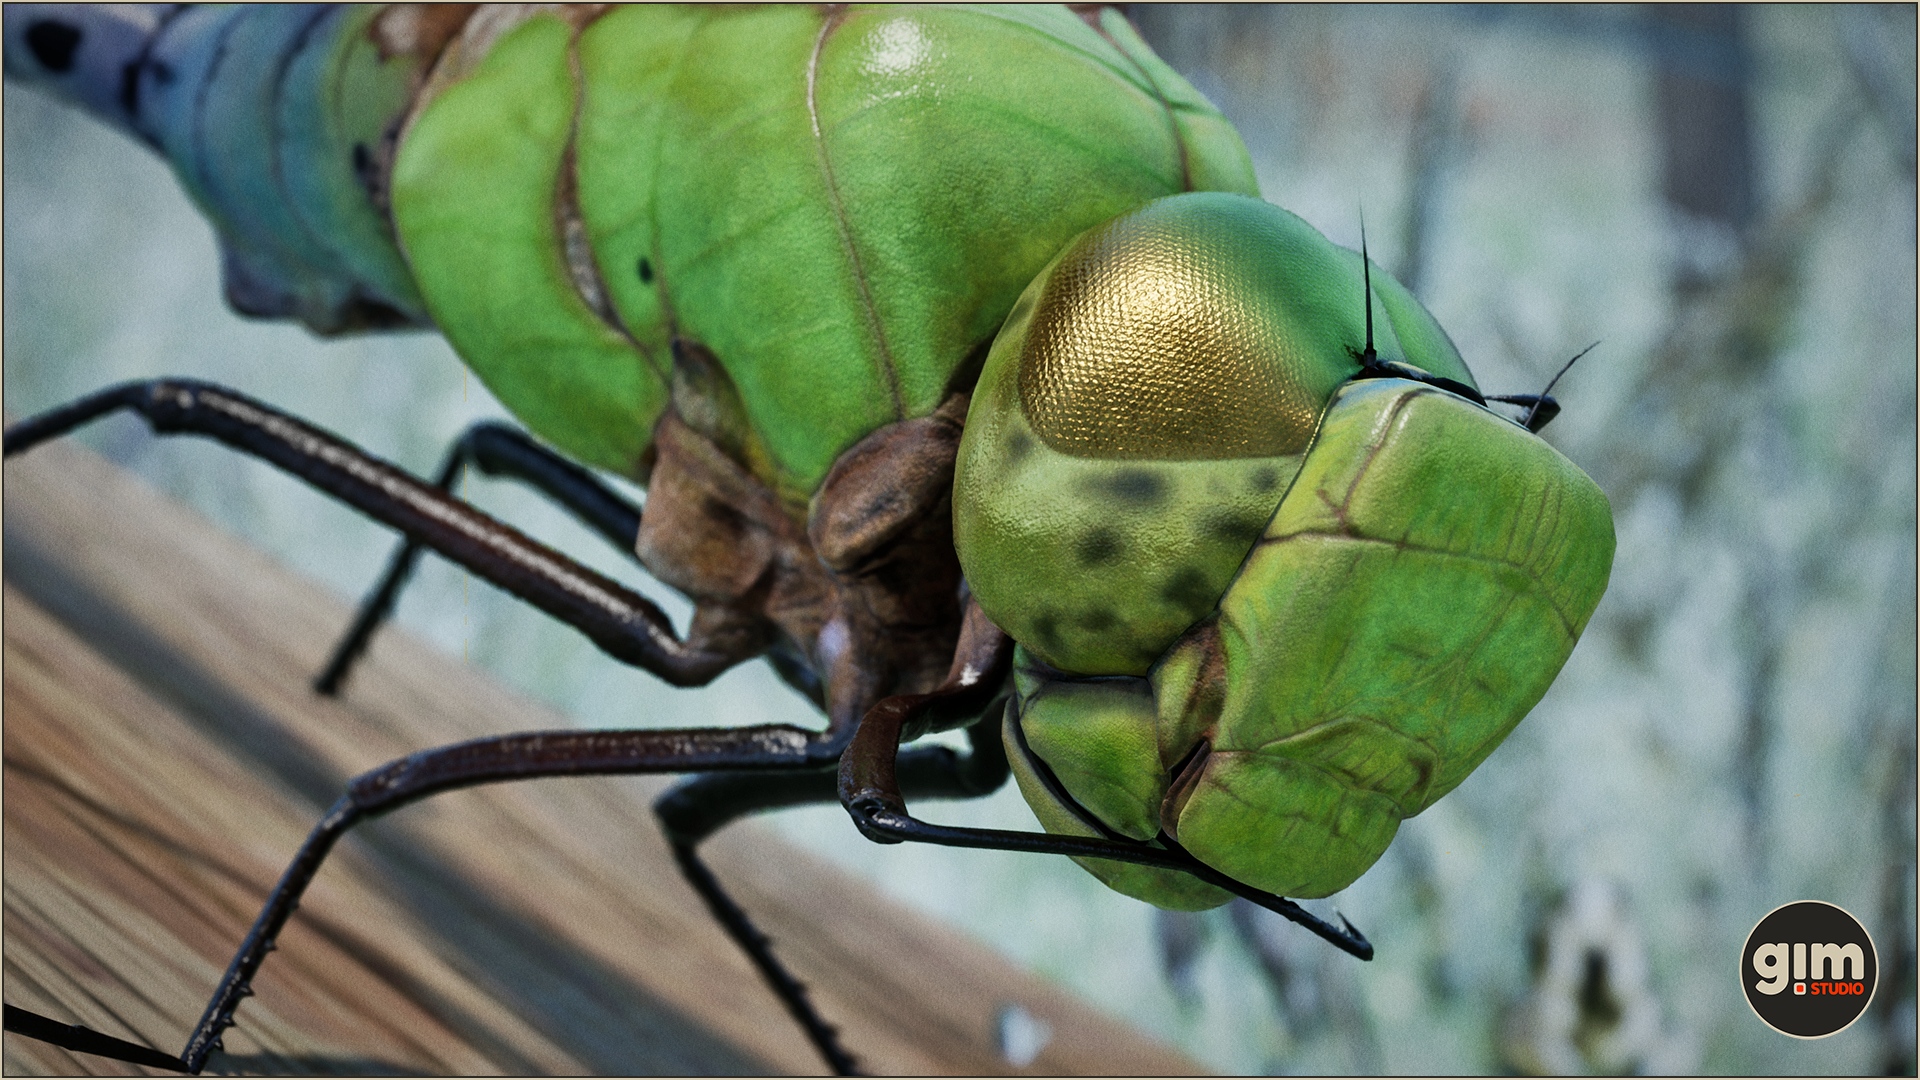 Green Darner Dragonfly in macro shot